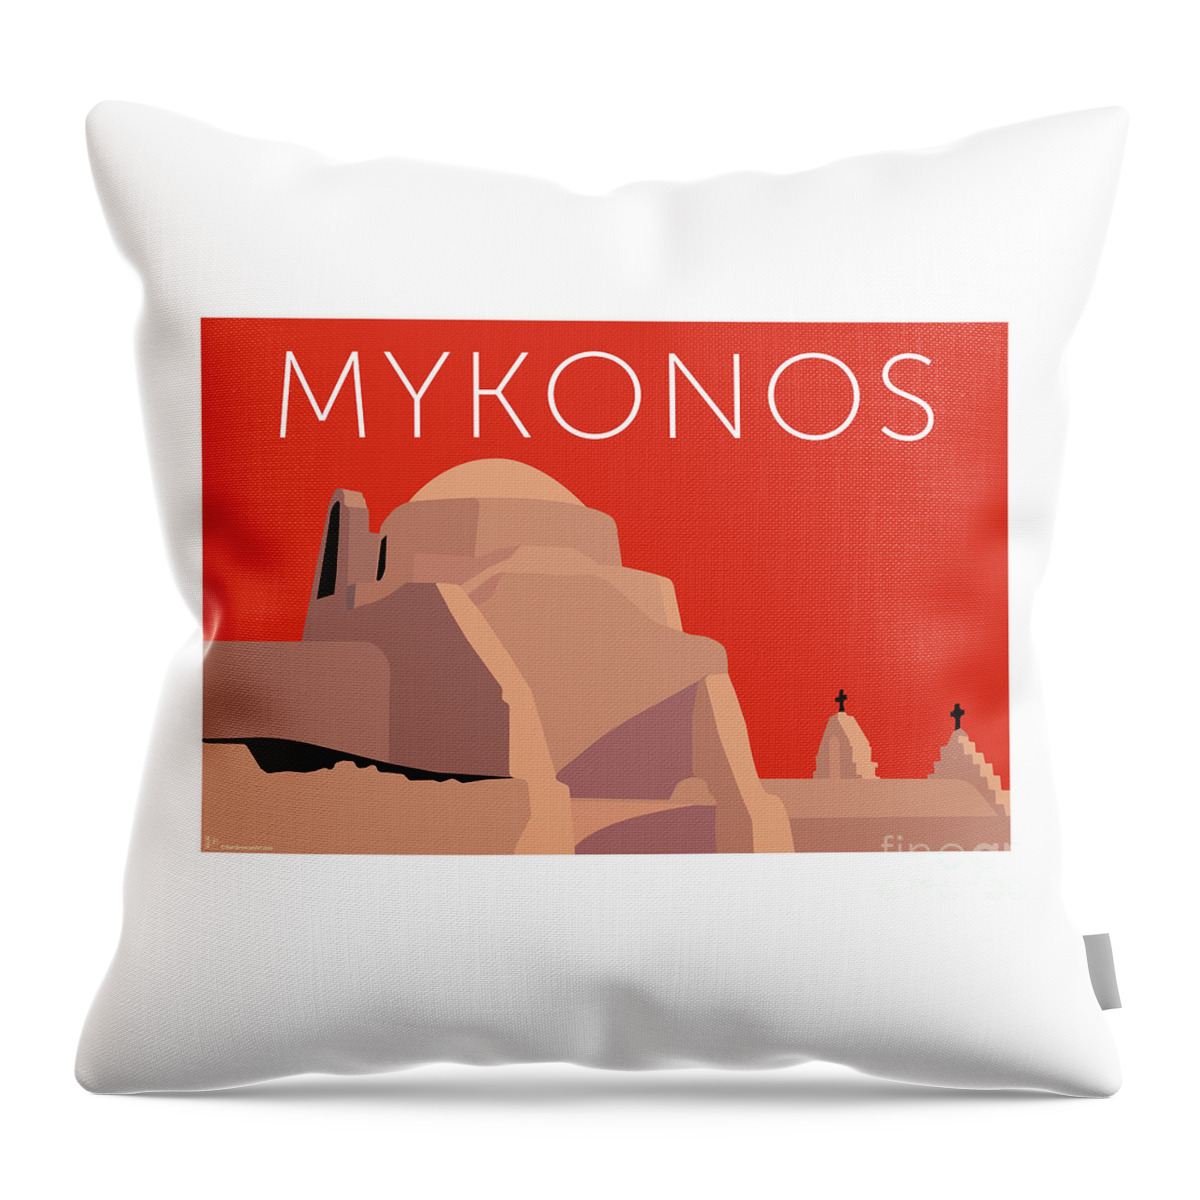 Mykonos Throw Pillow featuring the digital art MYKONOS Paraportiani - Orange by Sam Brennan